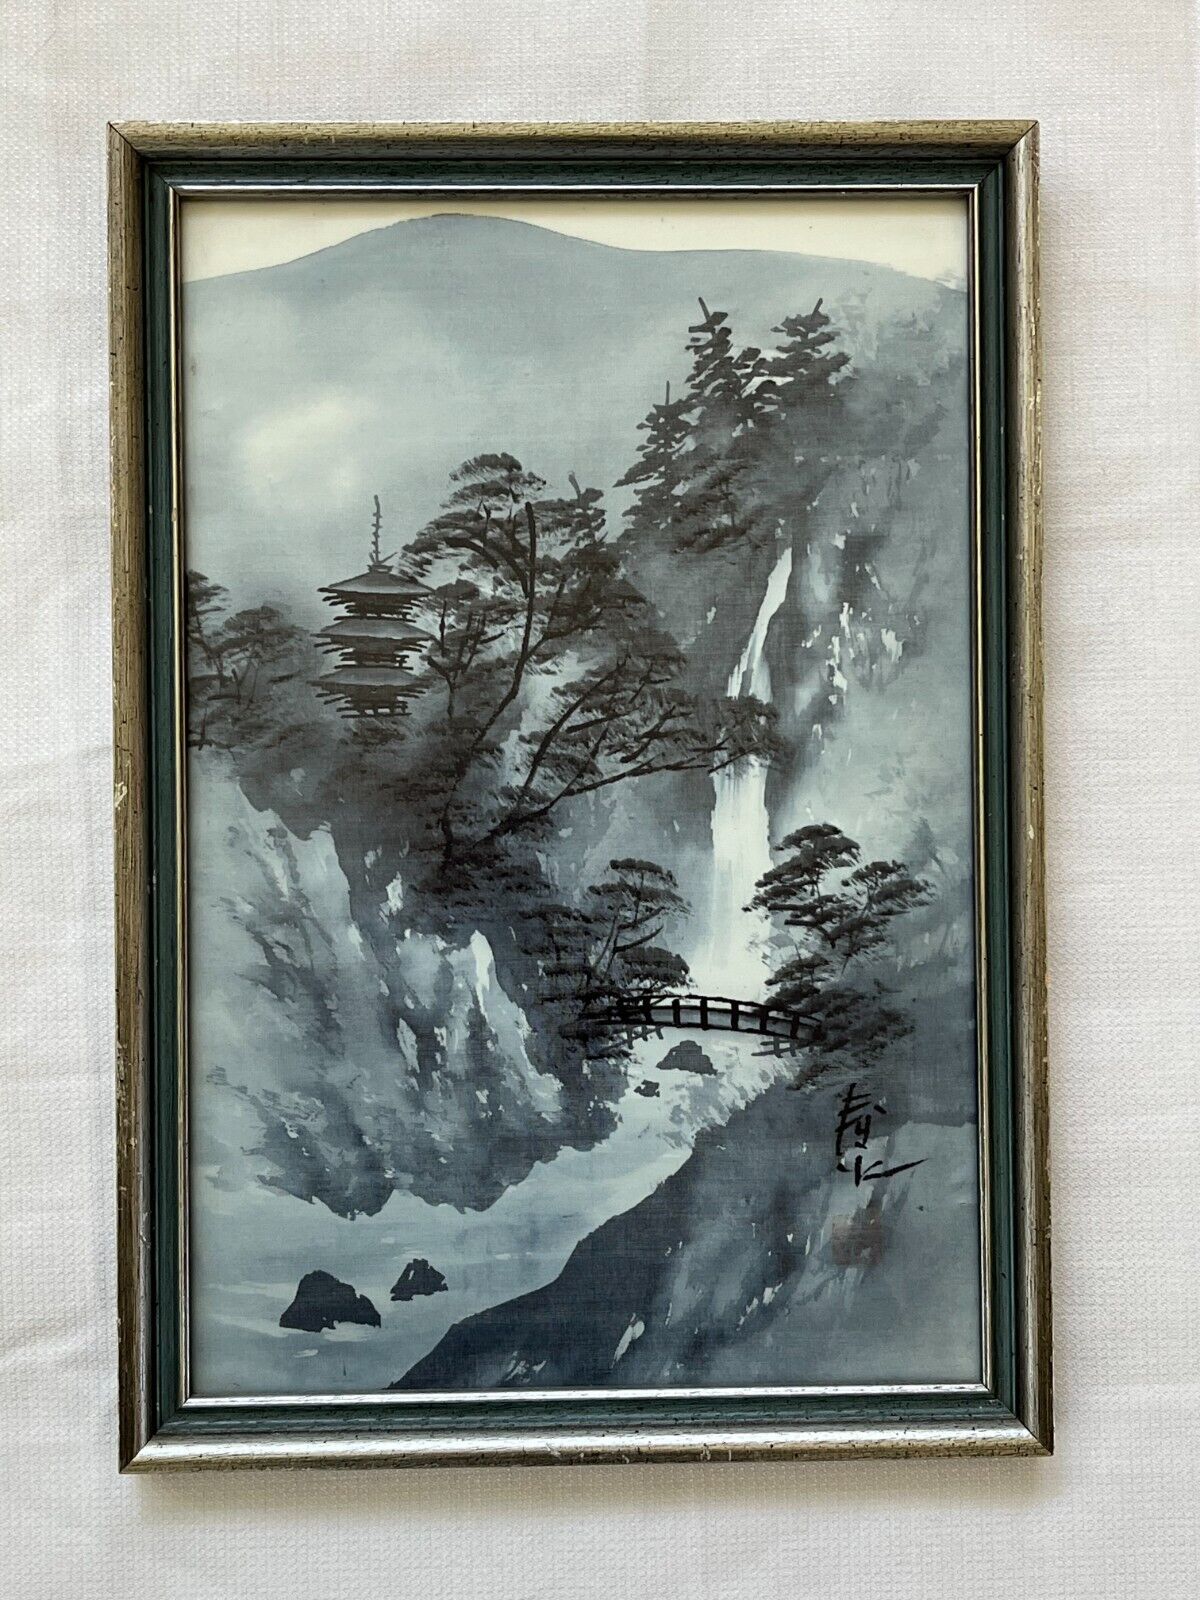 Vintage original Chinese Water-ink painting on silk landscape signed framed